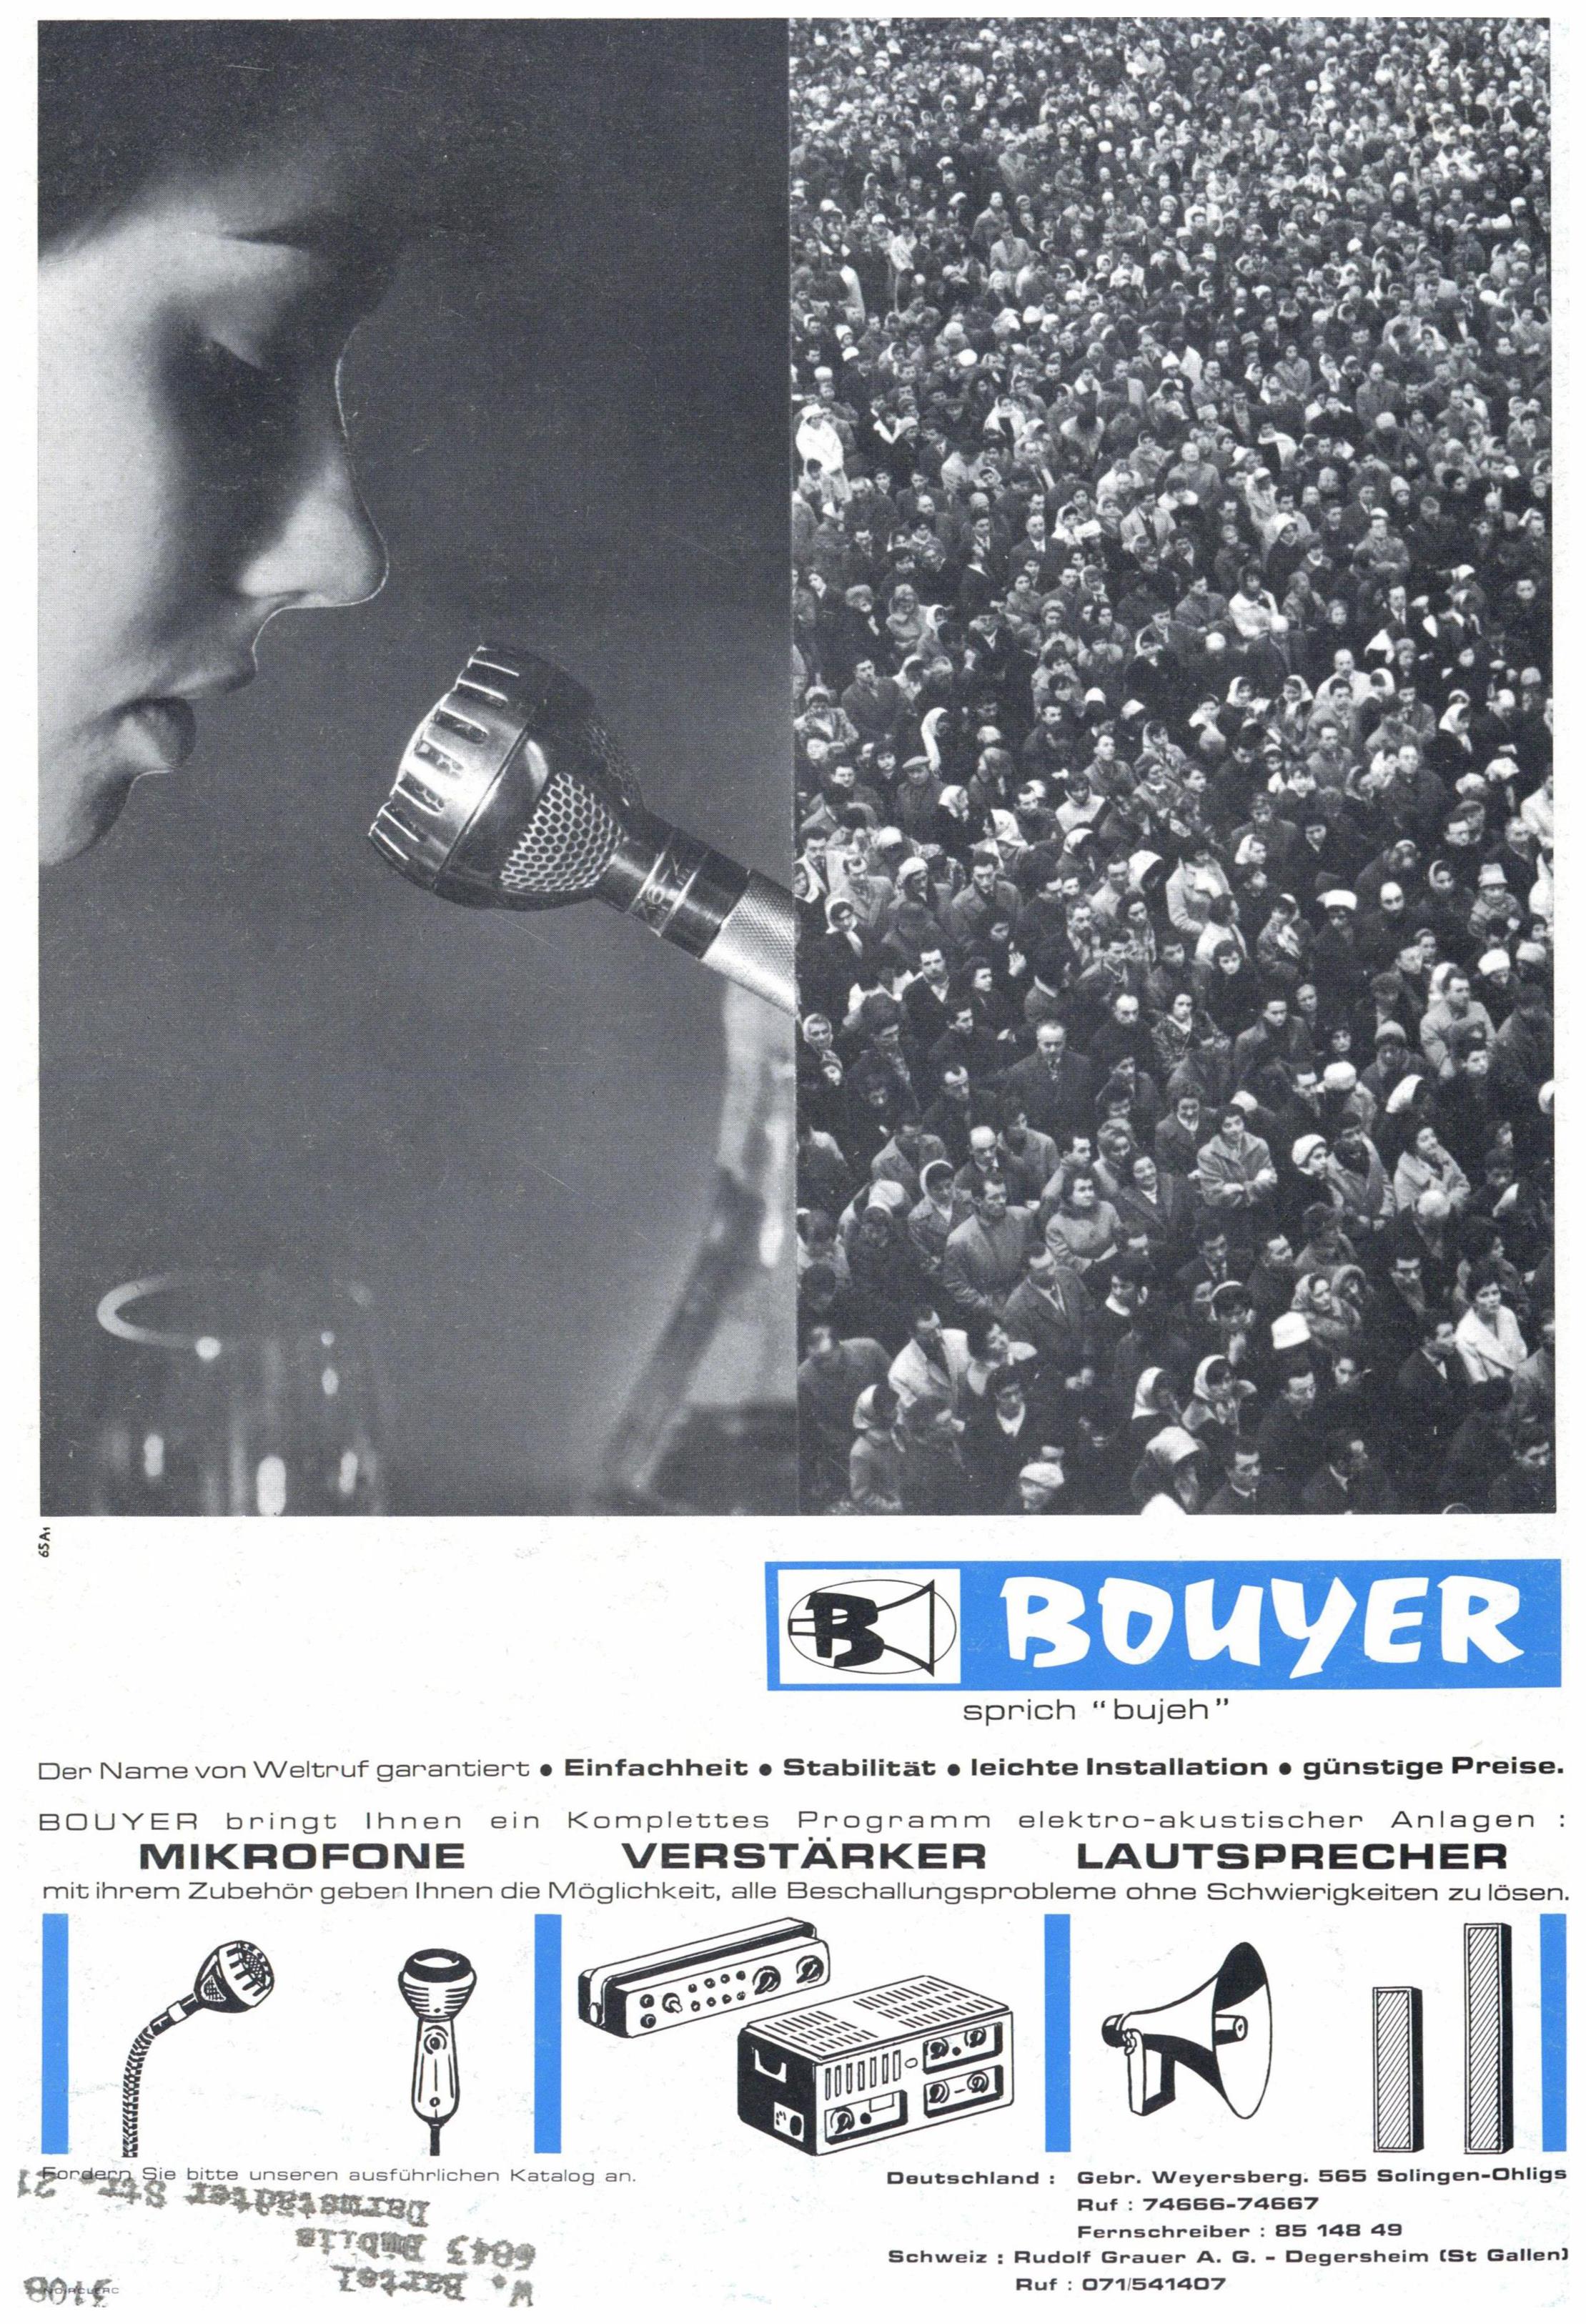 Bouyer 1965 2.jpg